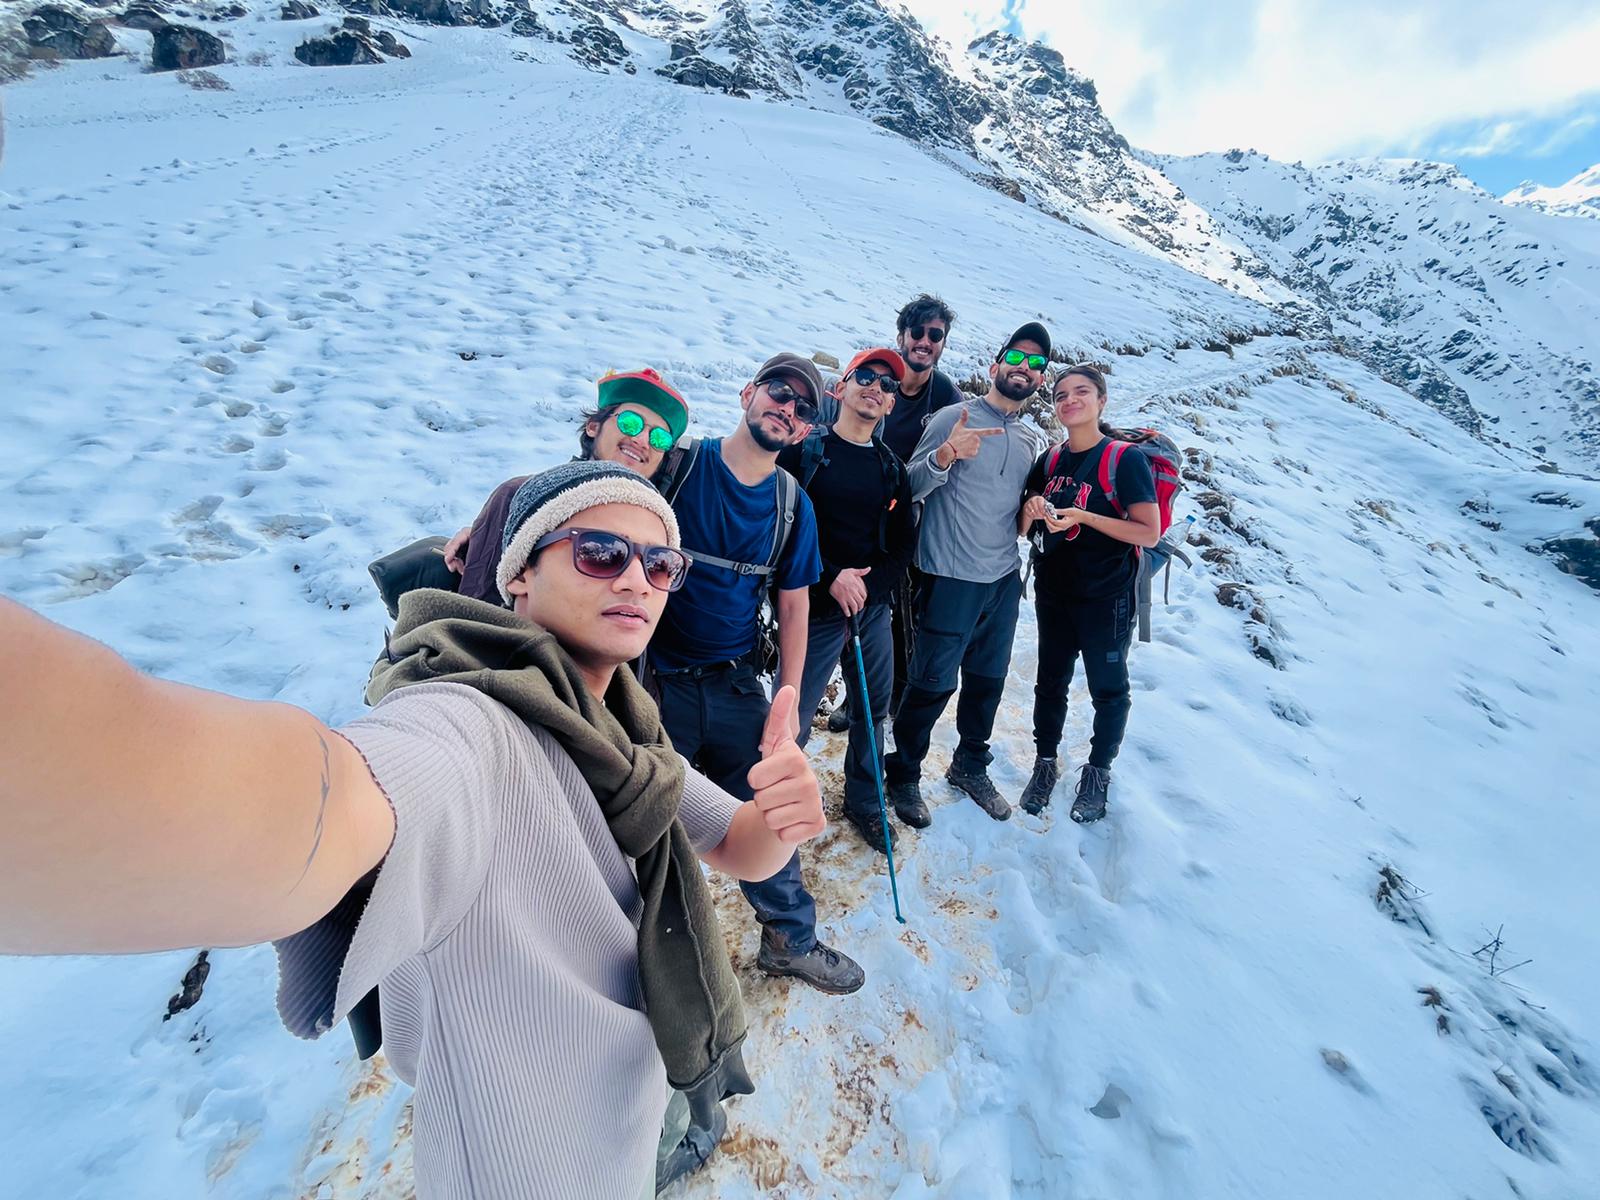 kedarnath yatra / trek / hike / trip with backpackerindia